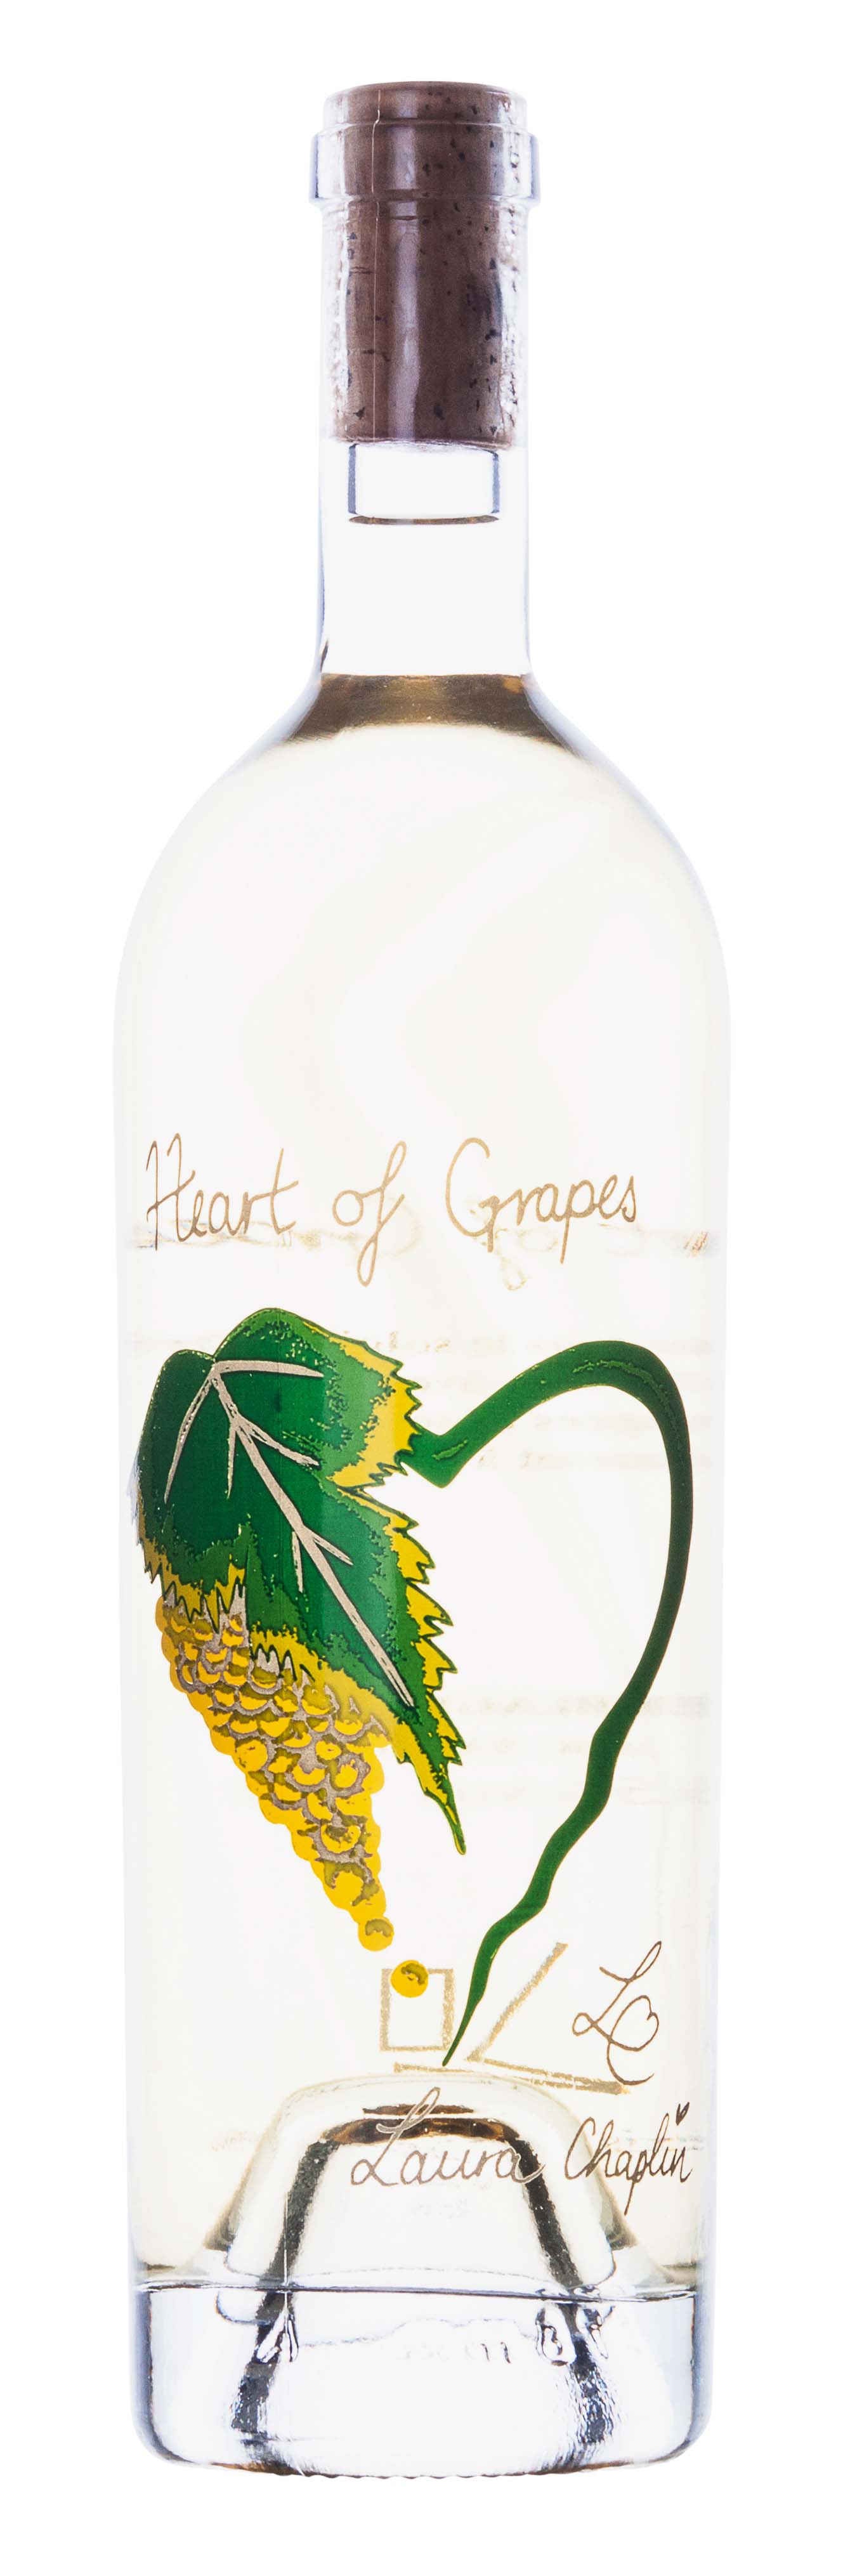 Valais AOC Heart of Grapes 2014